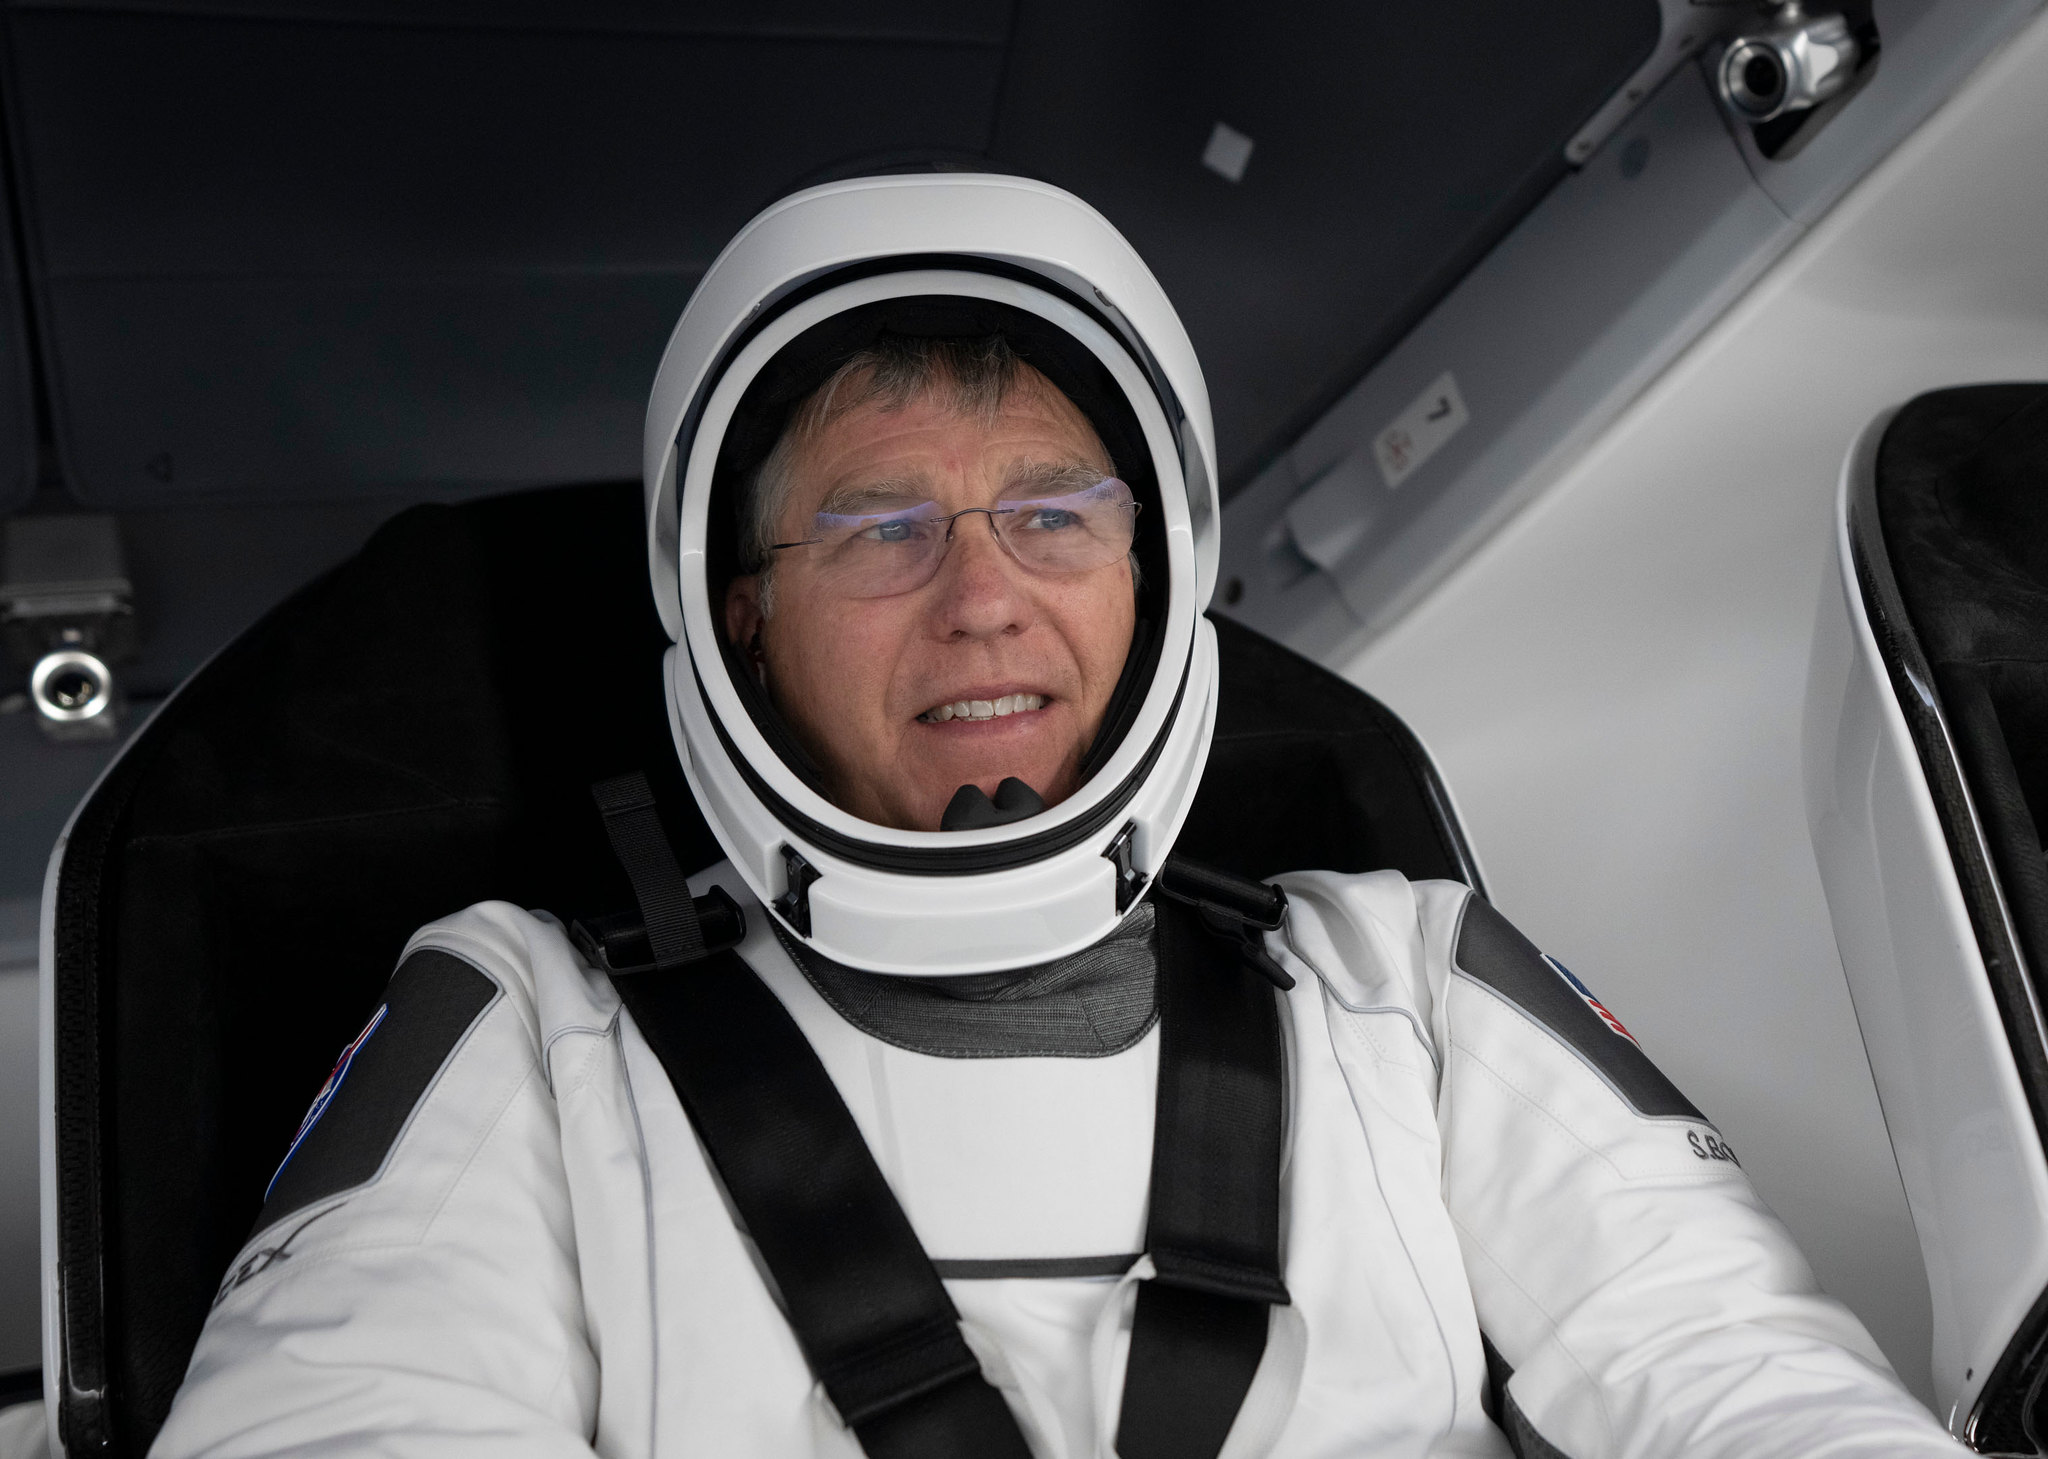 NASA astronaut Stephen Bowen sitting down in a spacecraft with a seatbelt